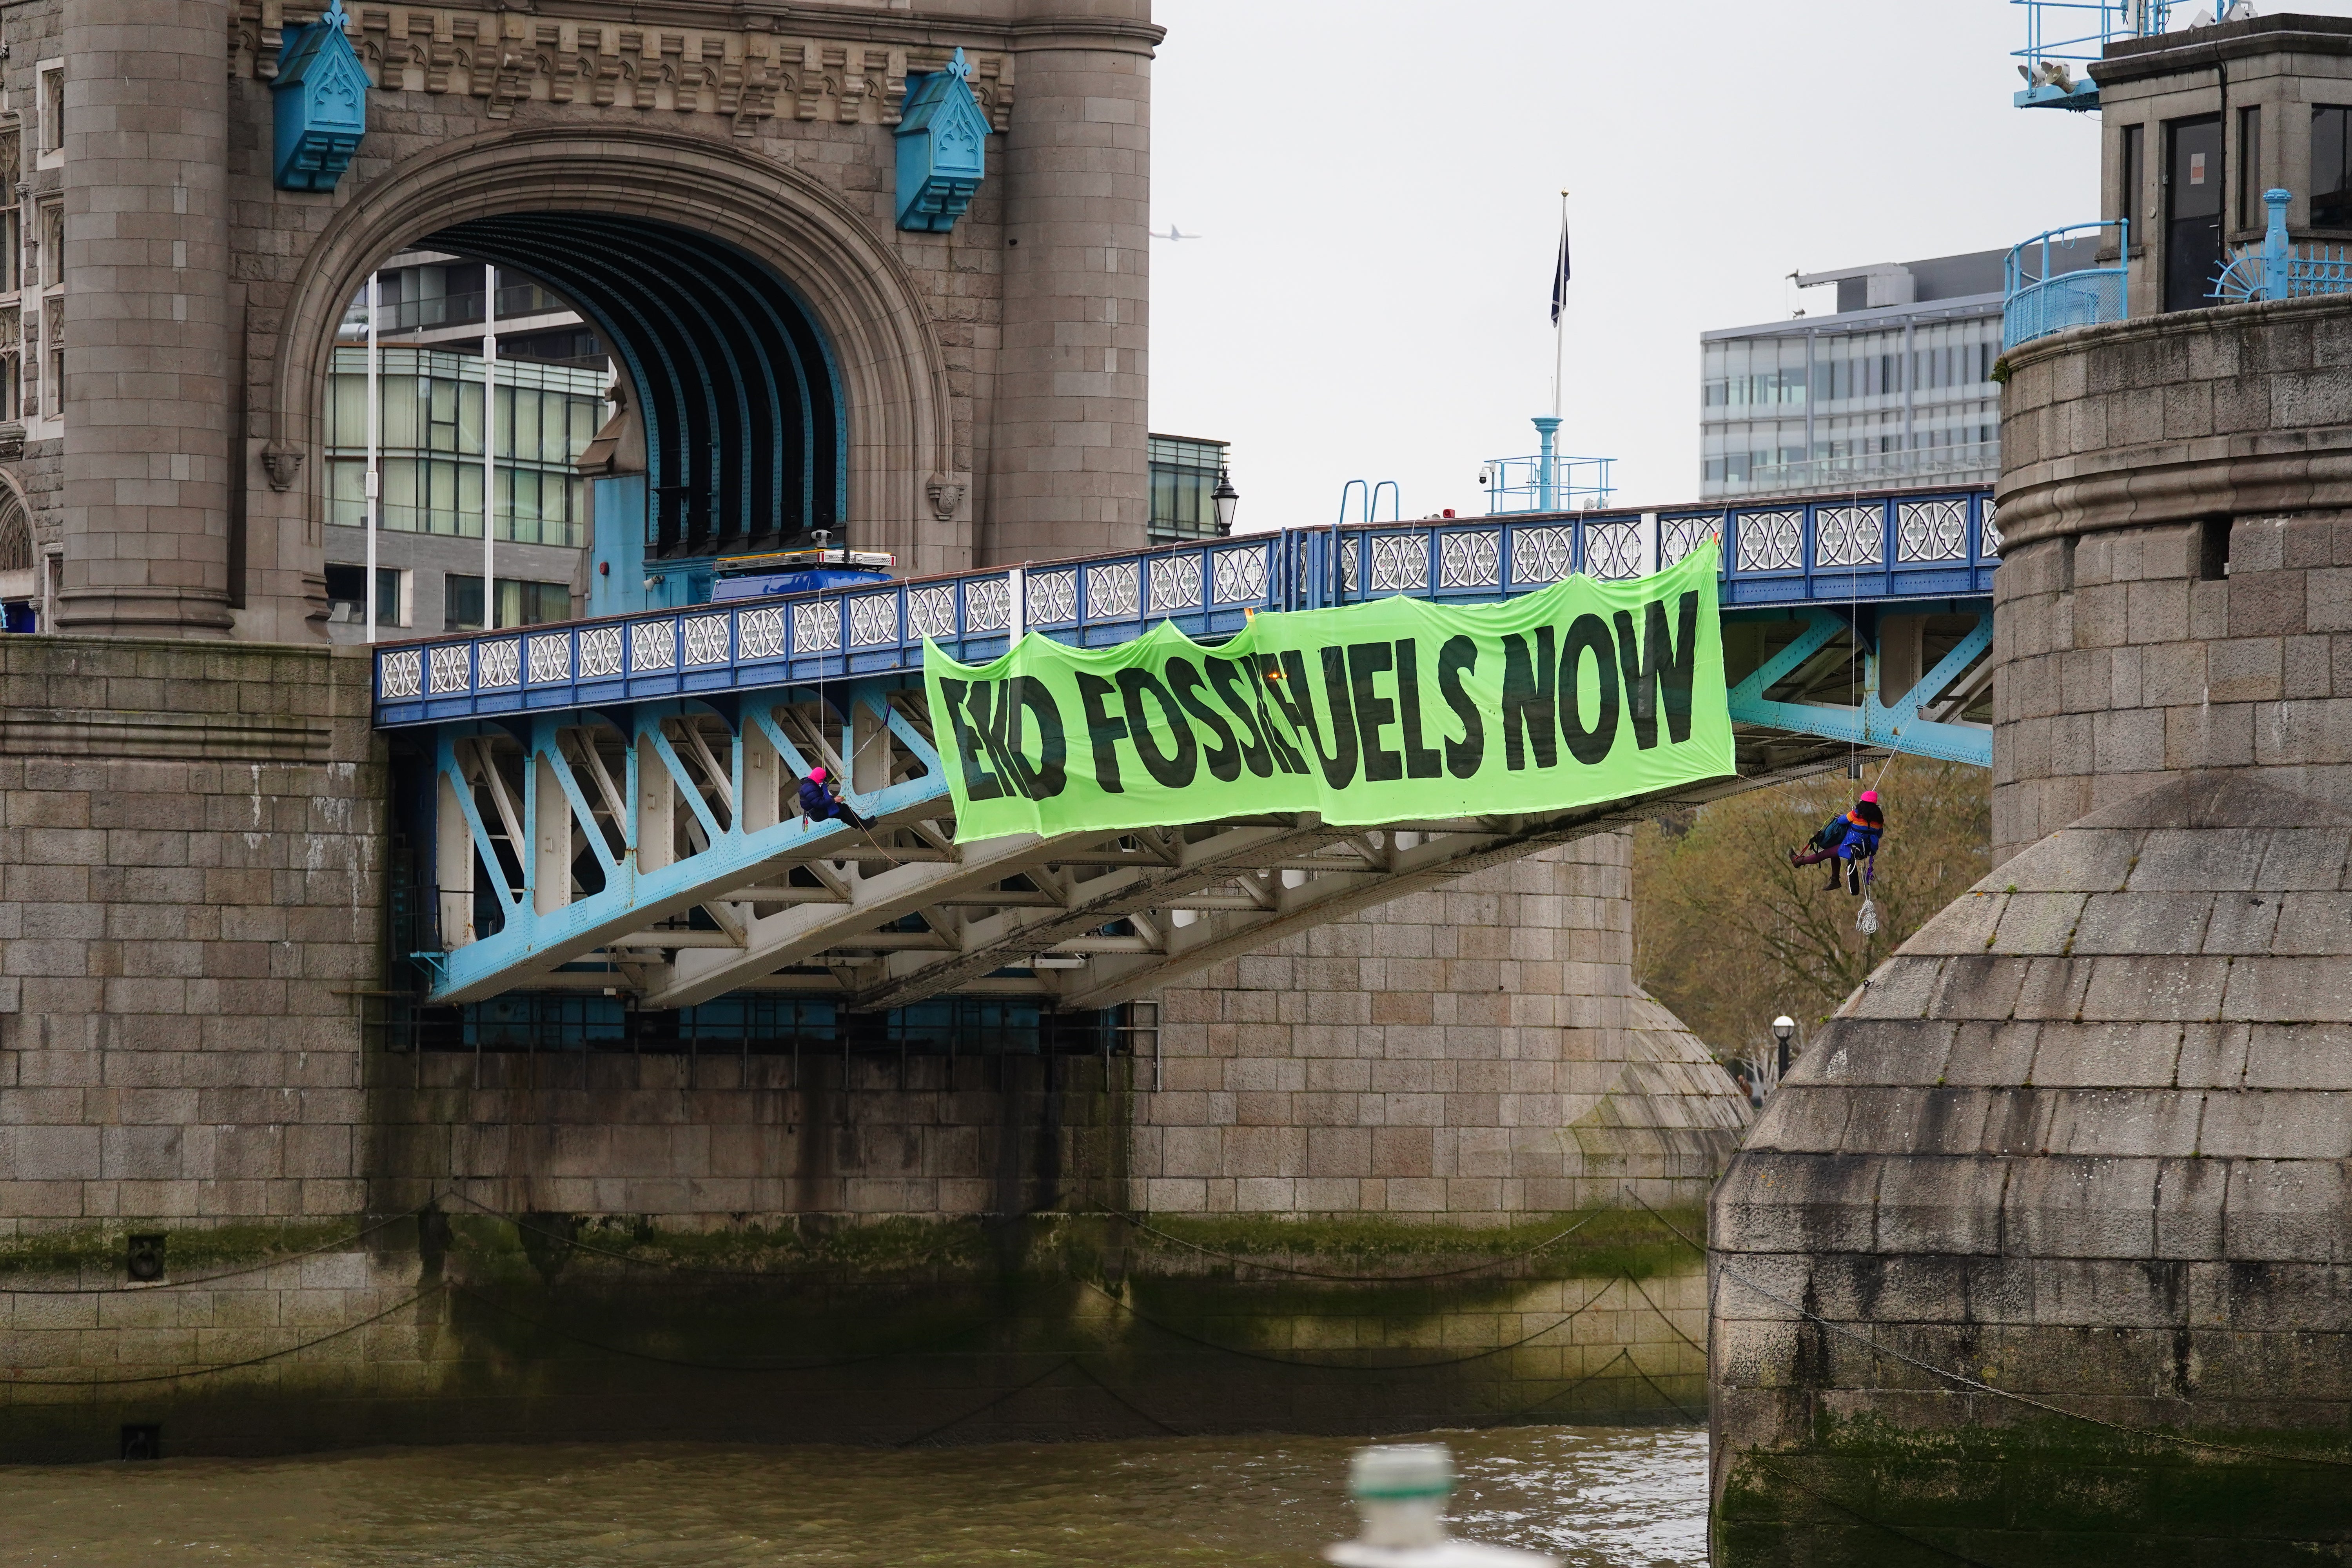 London Car Free Day: Tower Bridge shuts for mass yoga session - BBC News